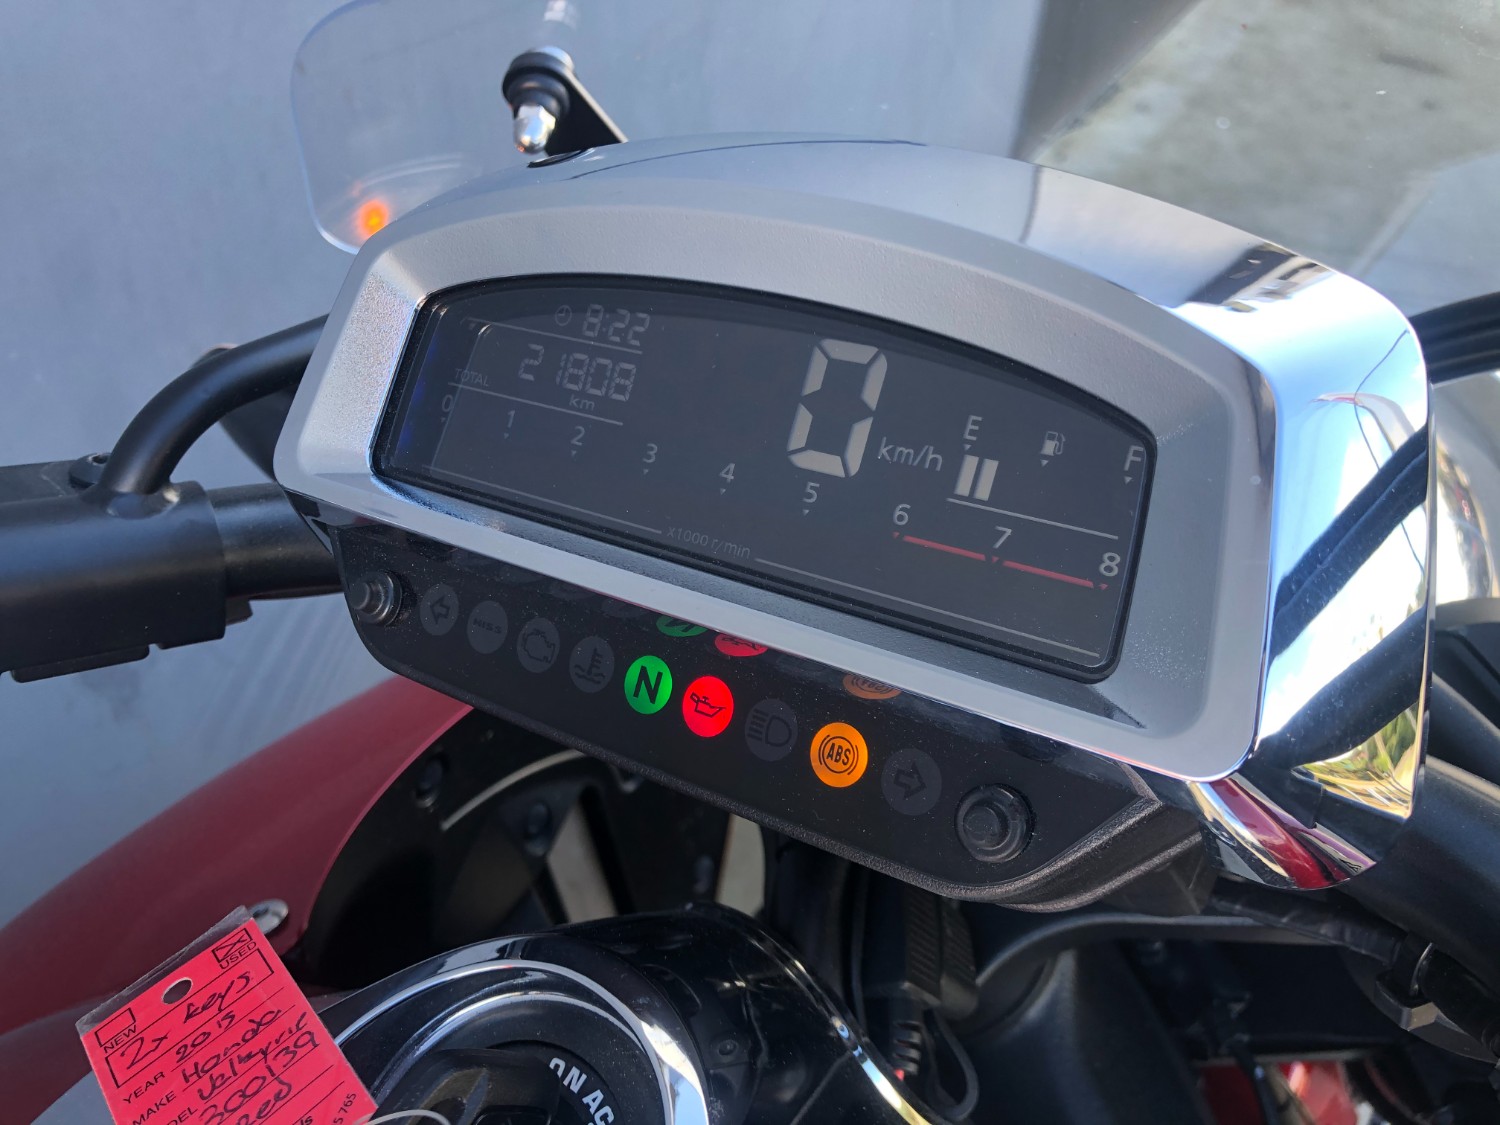 2015 Honda Valkyrie 1800cc GL1800C Motorcycle Image 15